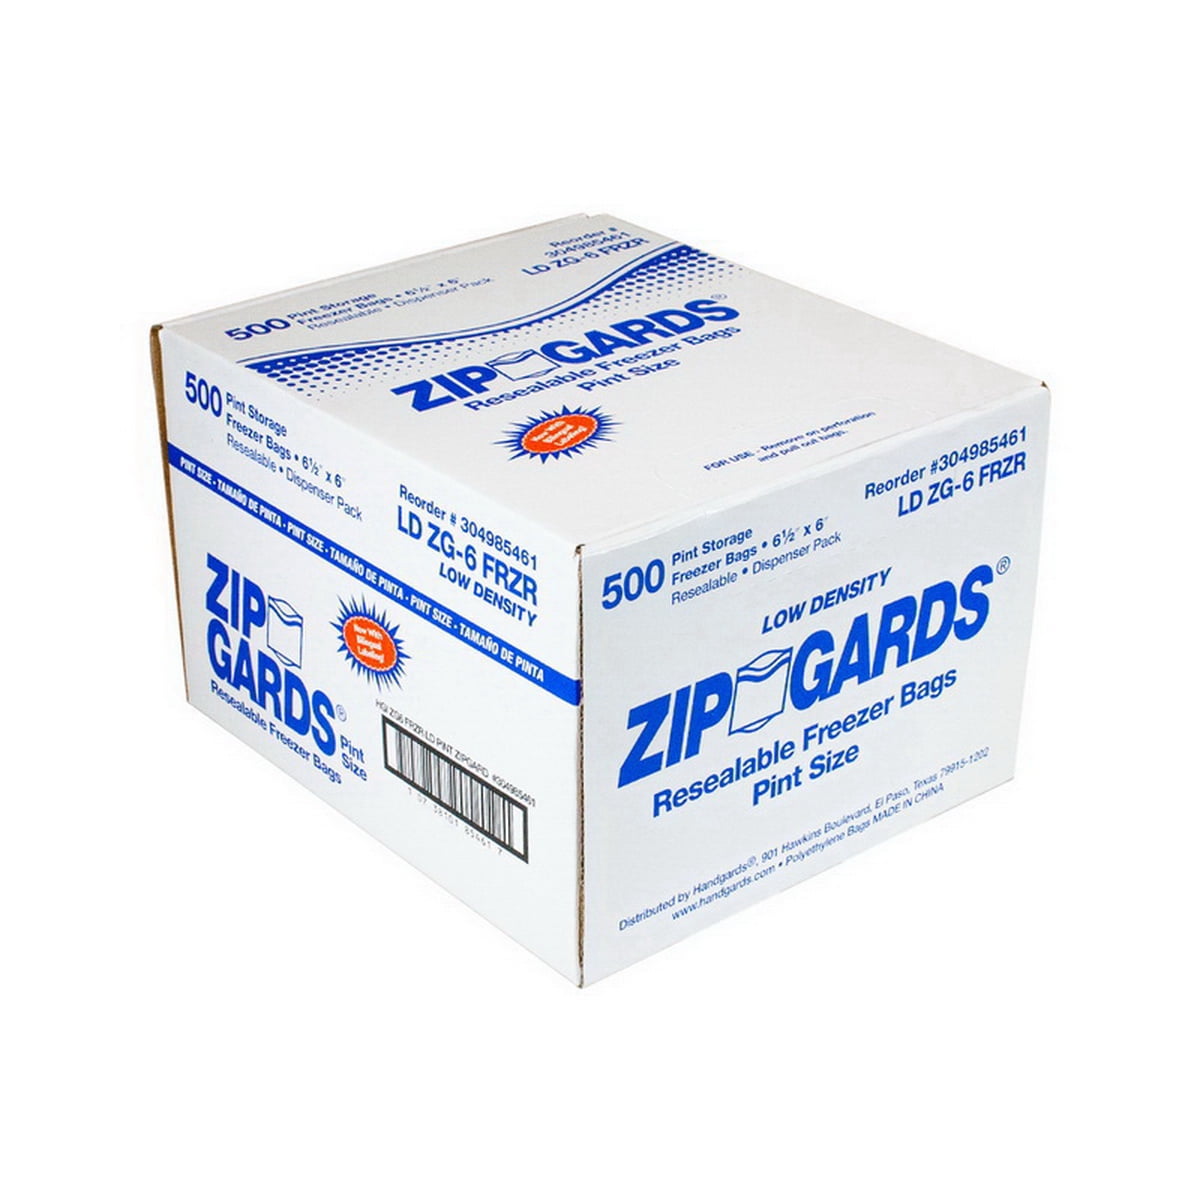 80 Count Free Shipping Ziploc Freezer Pint Bags 80ct